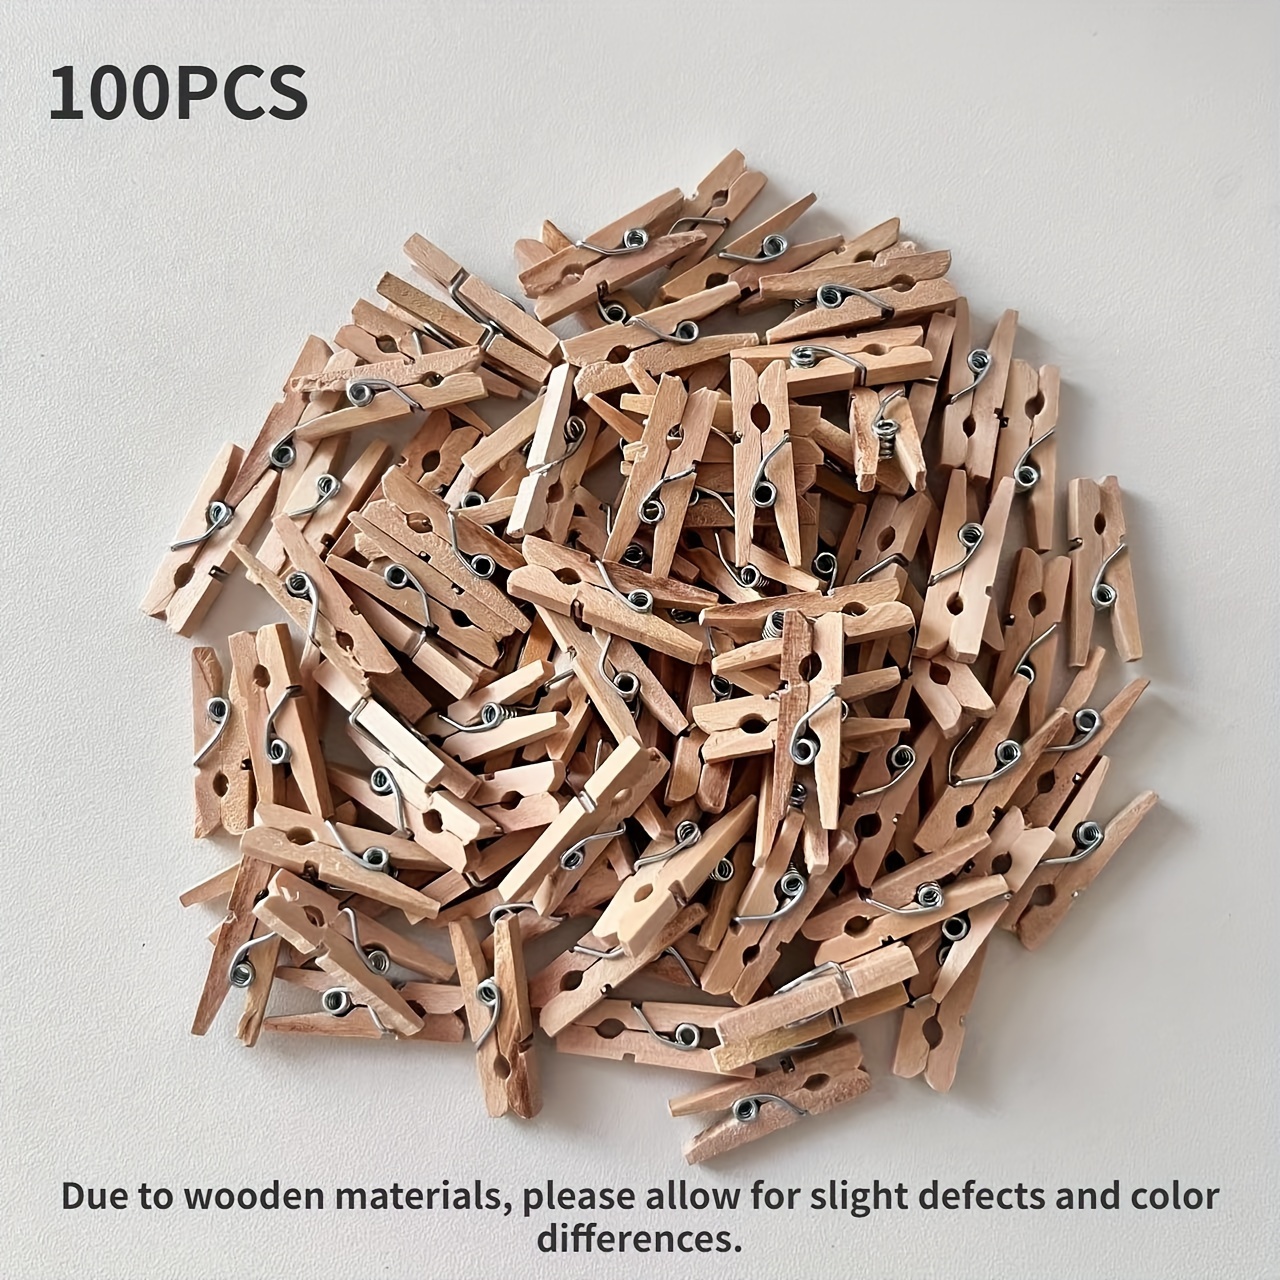 100Pcs/lot Wood Cloth Pegs Pins Quality Mini Clothes Pin Crafts